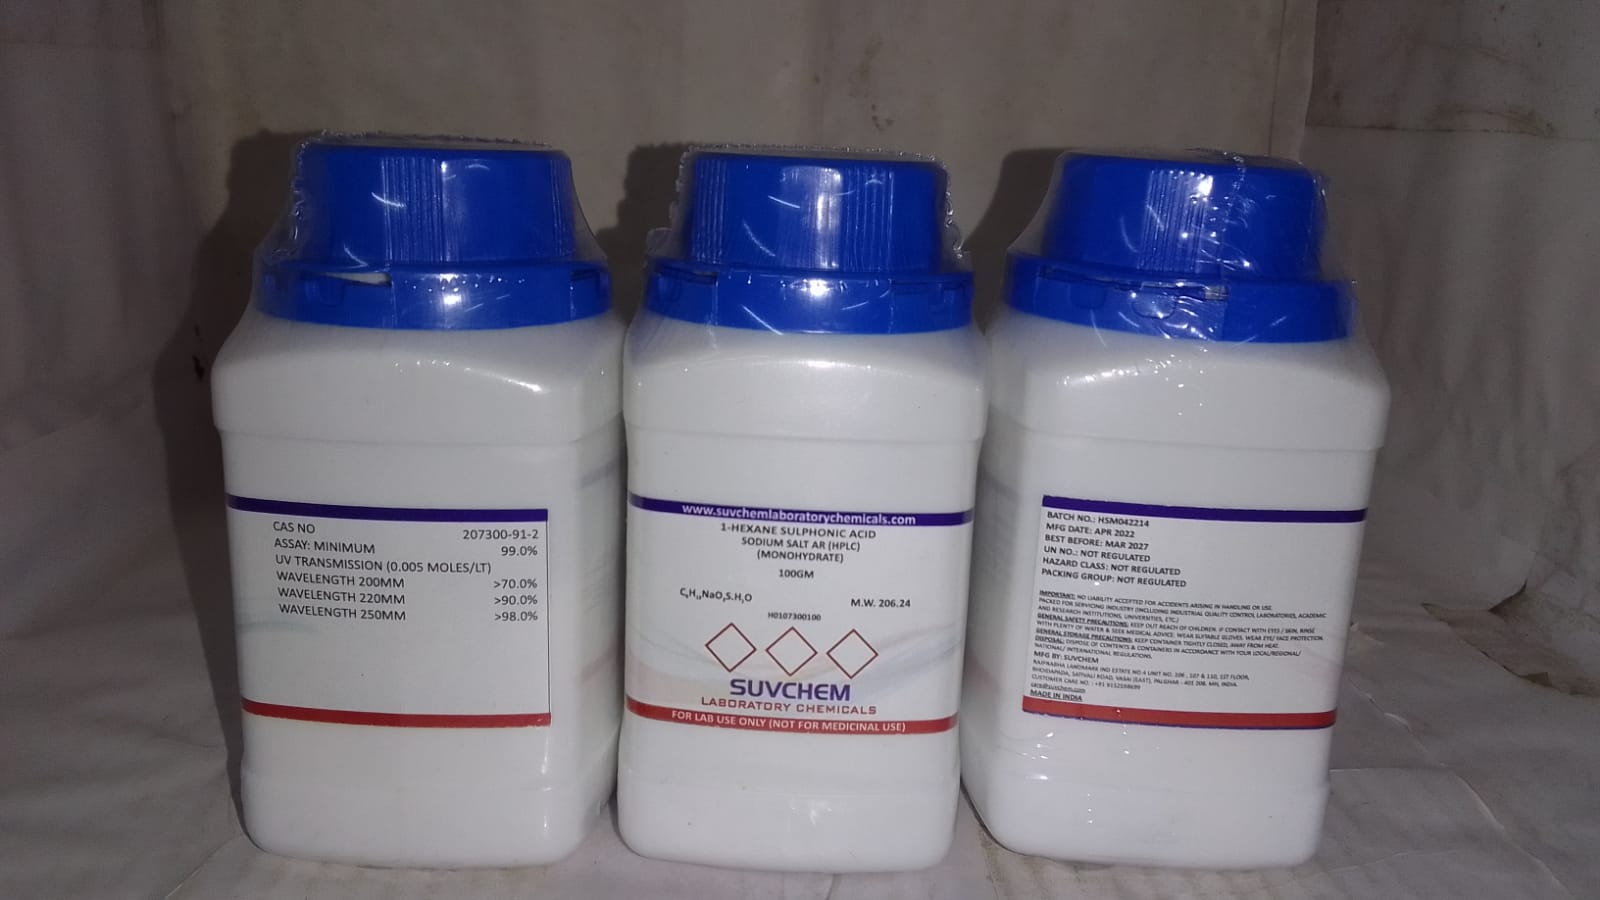 1-HEXANE SULPHONIC ACID SODIUM SALT MONOHYDRATE (HPLC) AR